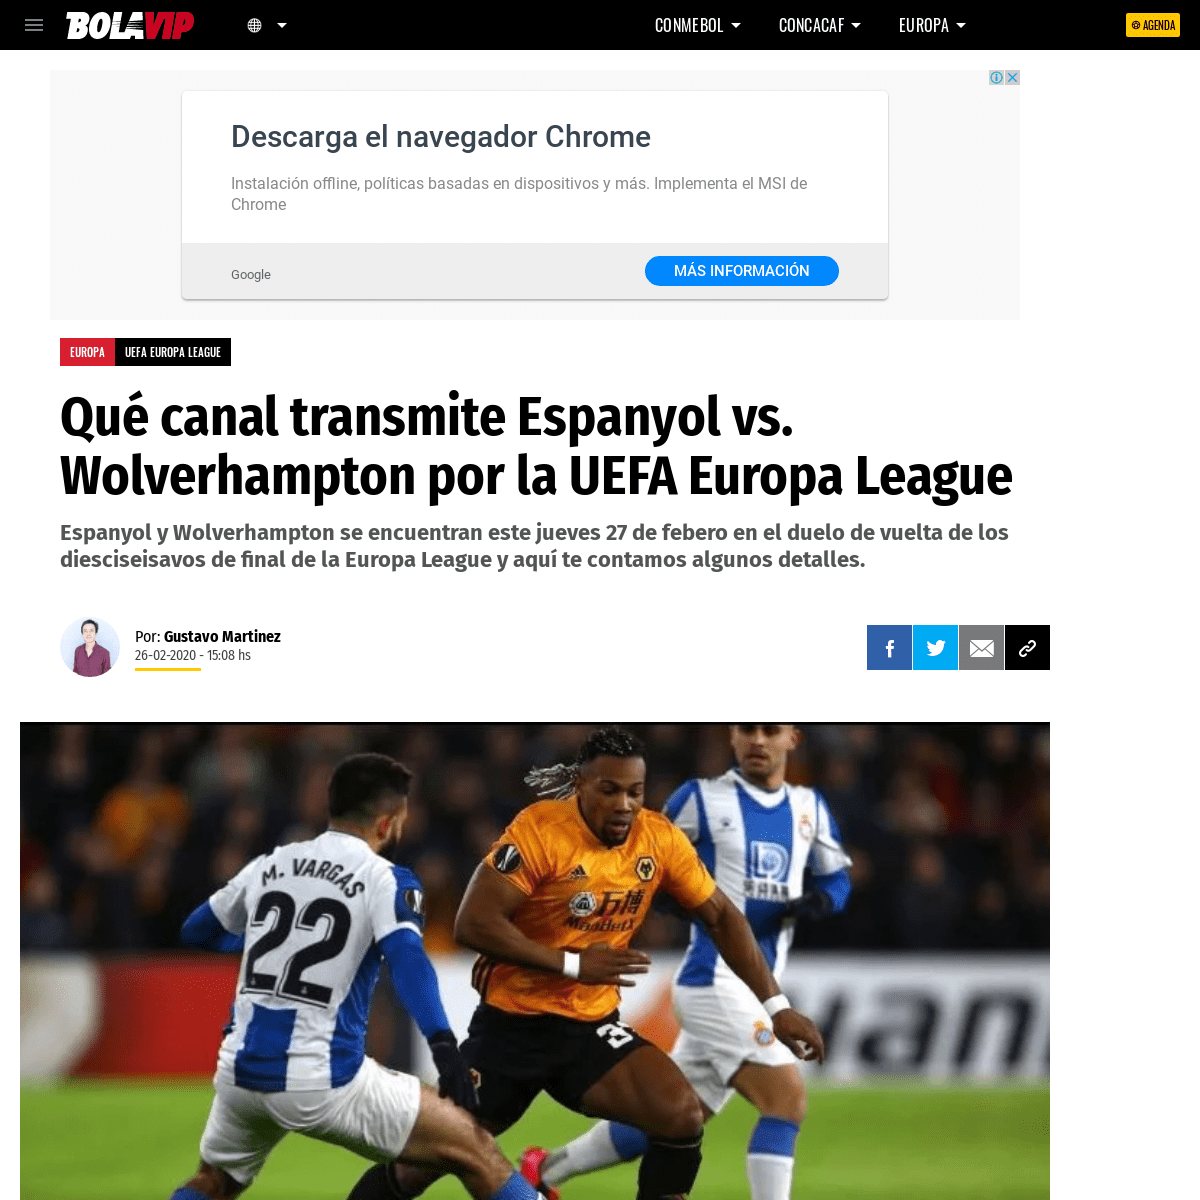 A complete backup of bolavip.com/europa/Que-canal-transmite-Espanyol-vs.-Wolverhampton-por-la-UEFA-Europa-League-F22-20200226-01